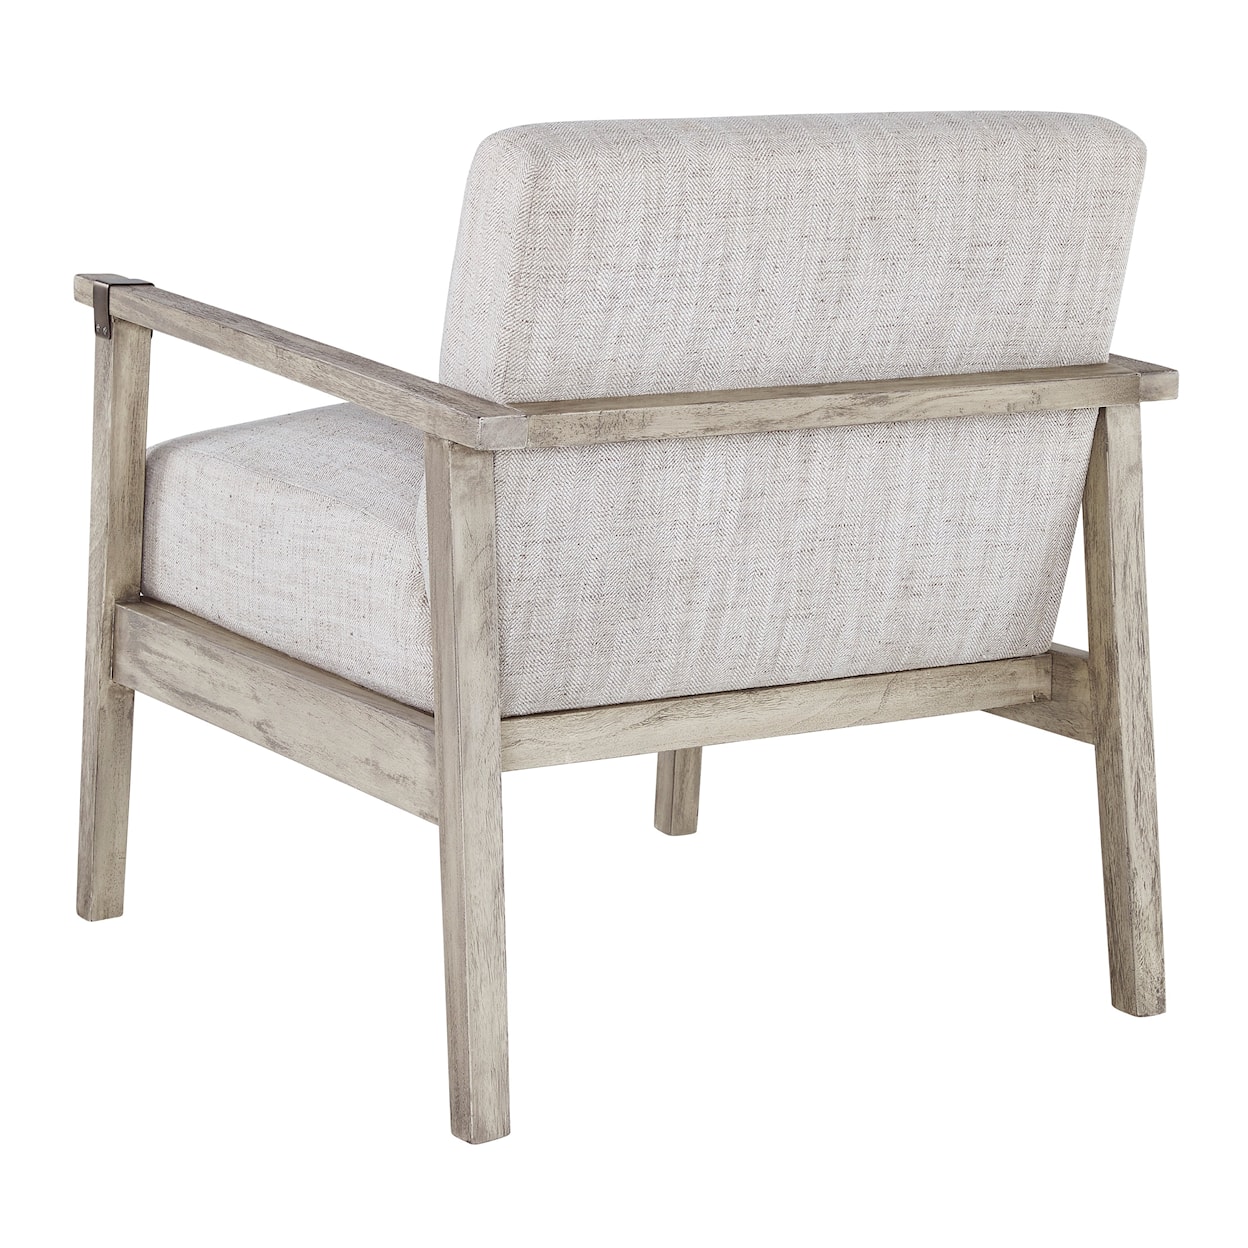 Ashley Furniture Signature Design Dalenville Accent Chair